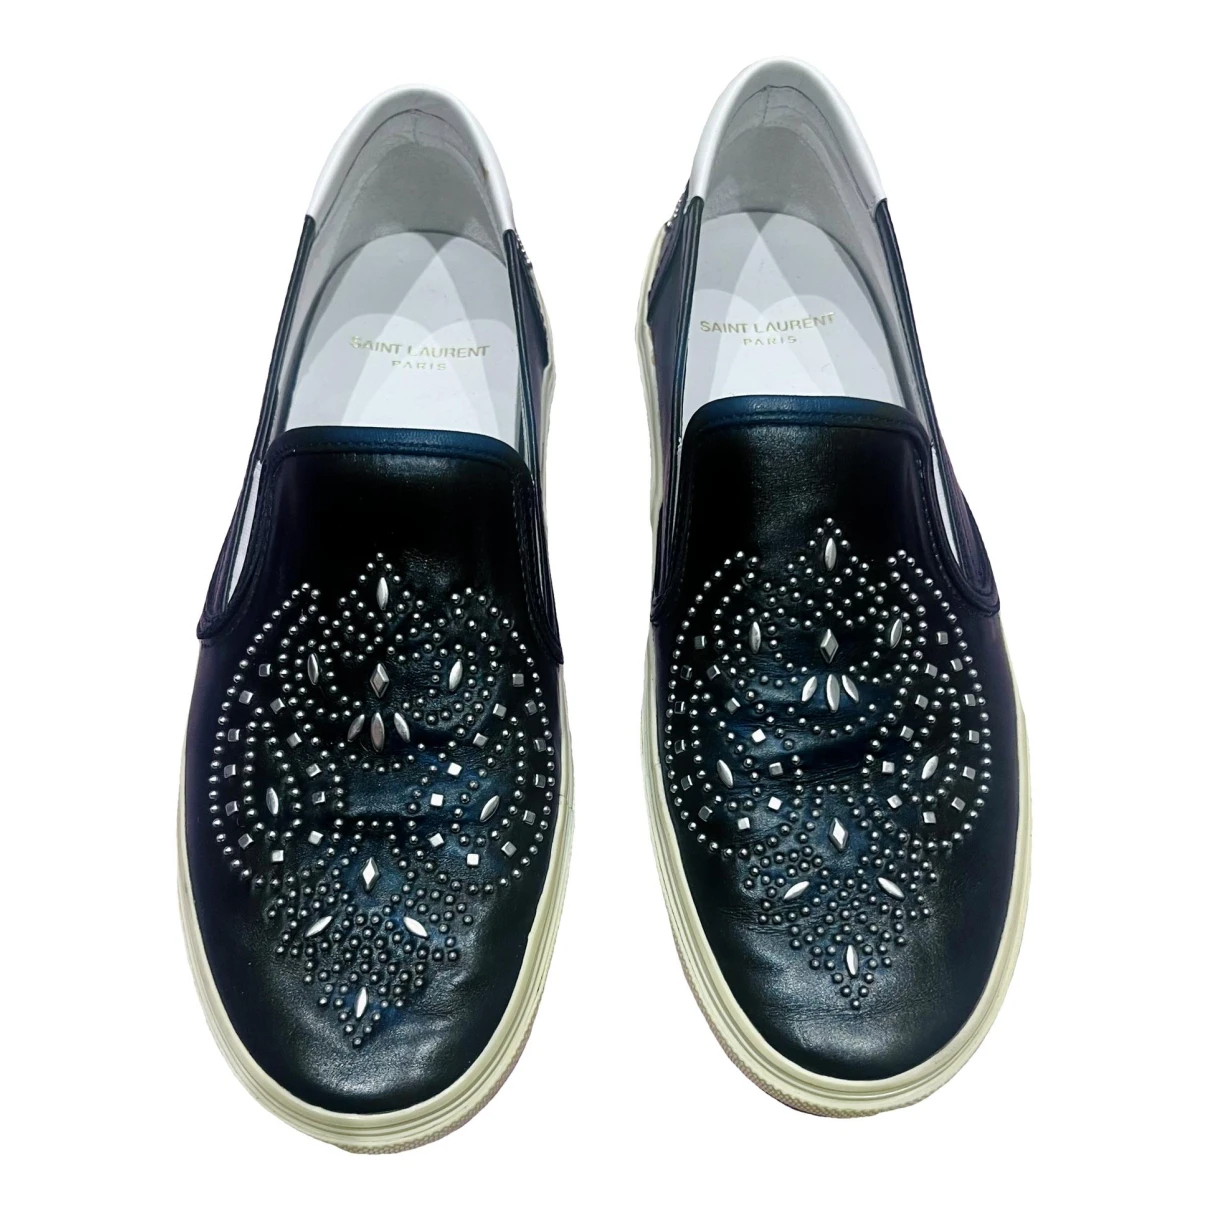 shoes Saint Laurent espadrilles for Female Leather 40 EU. Used condition